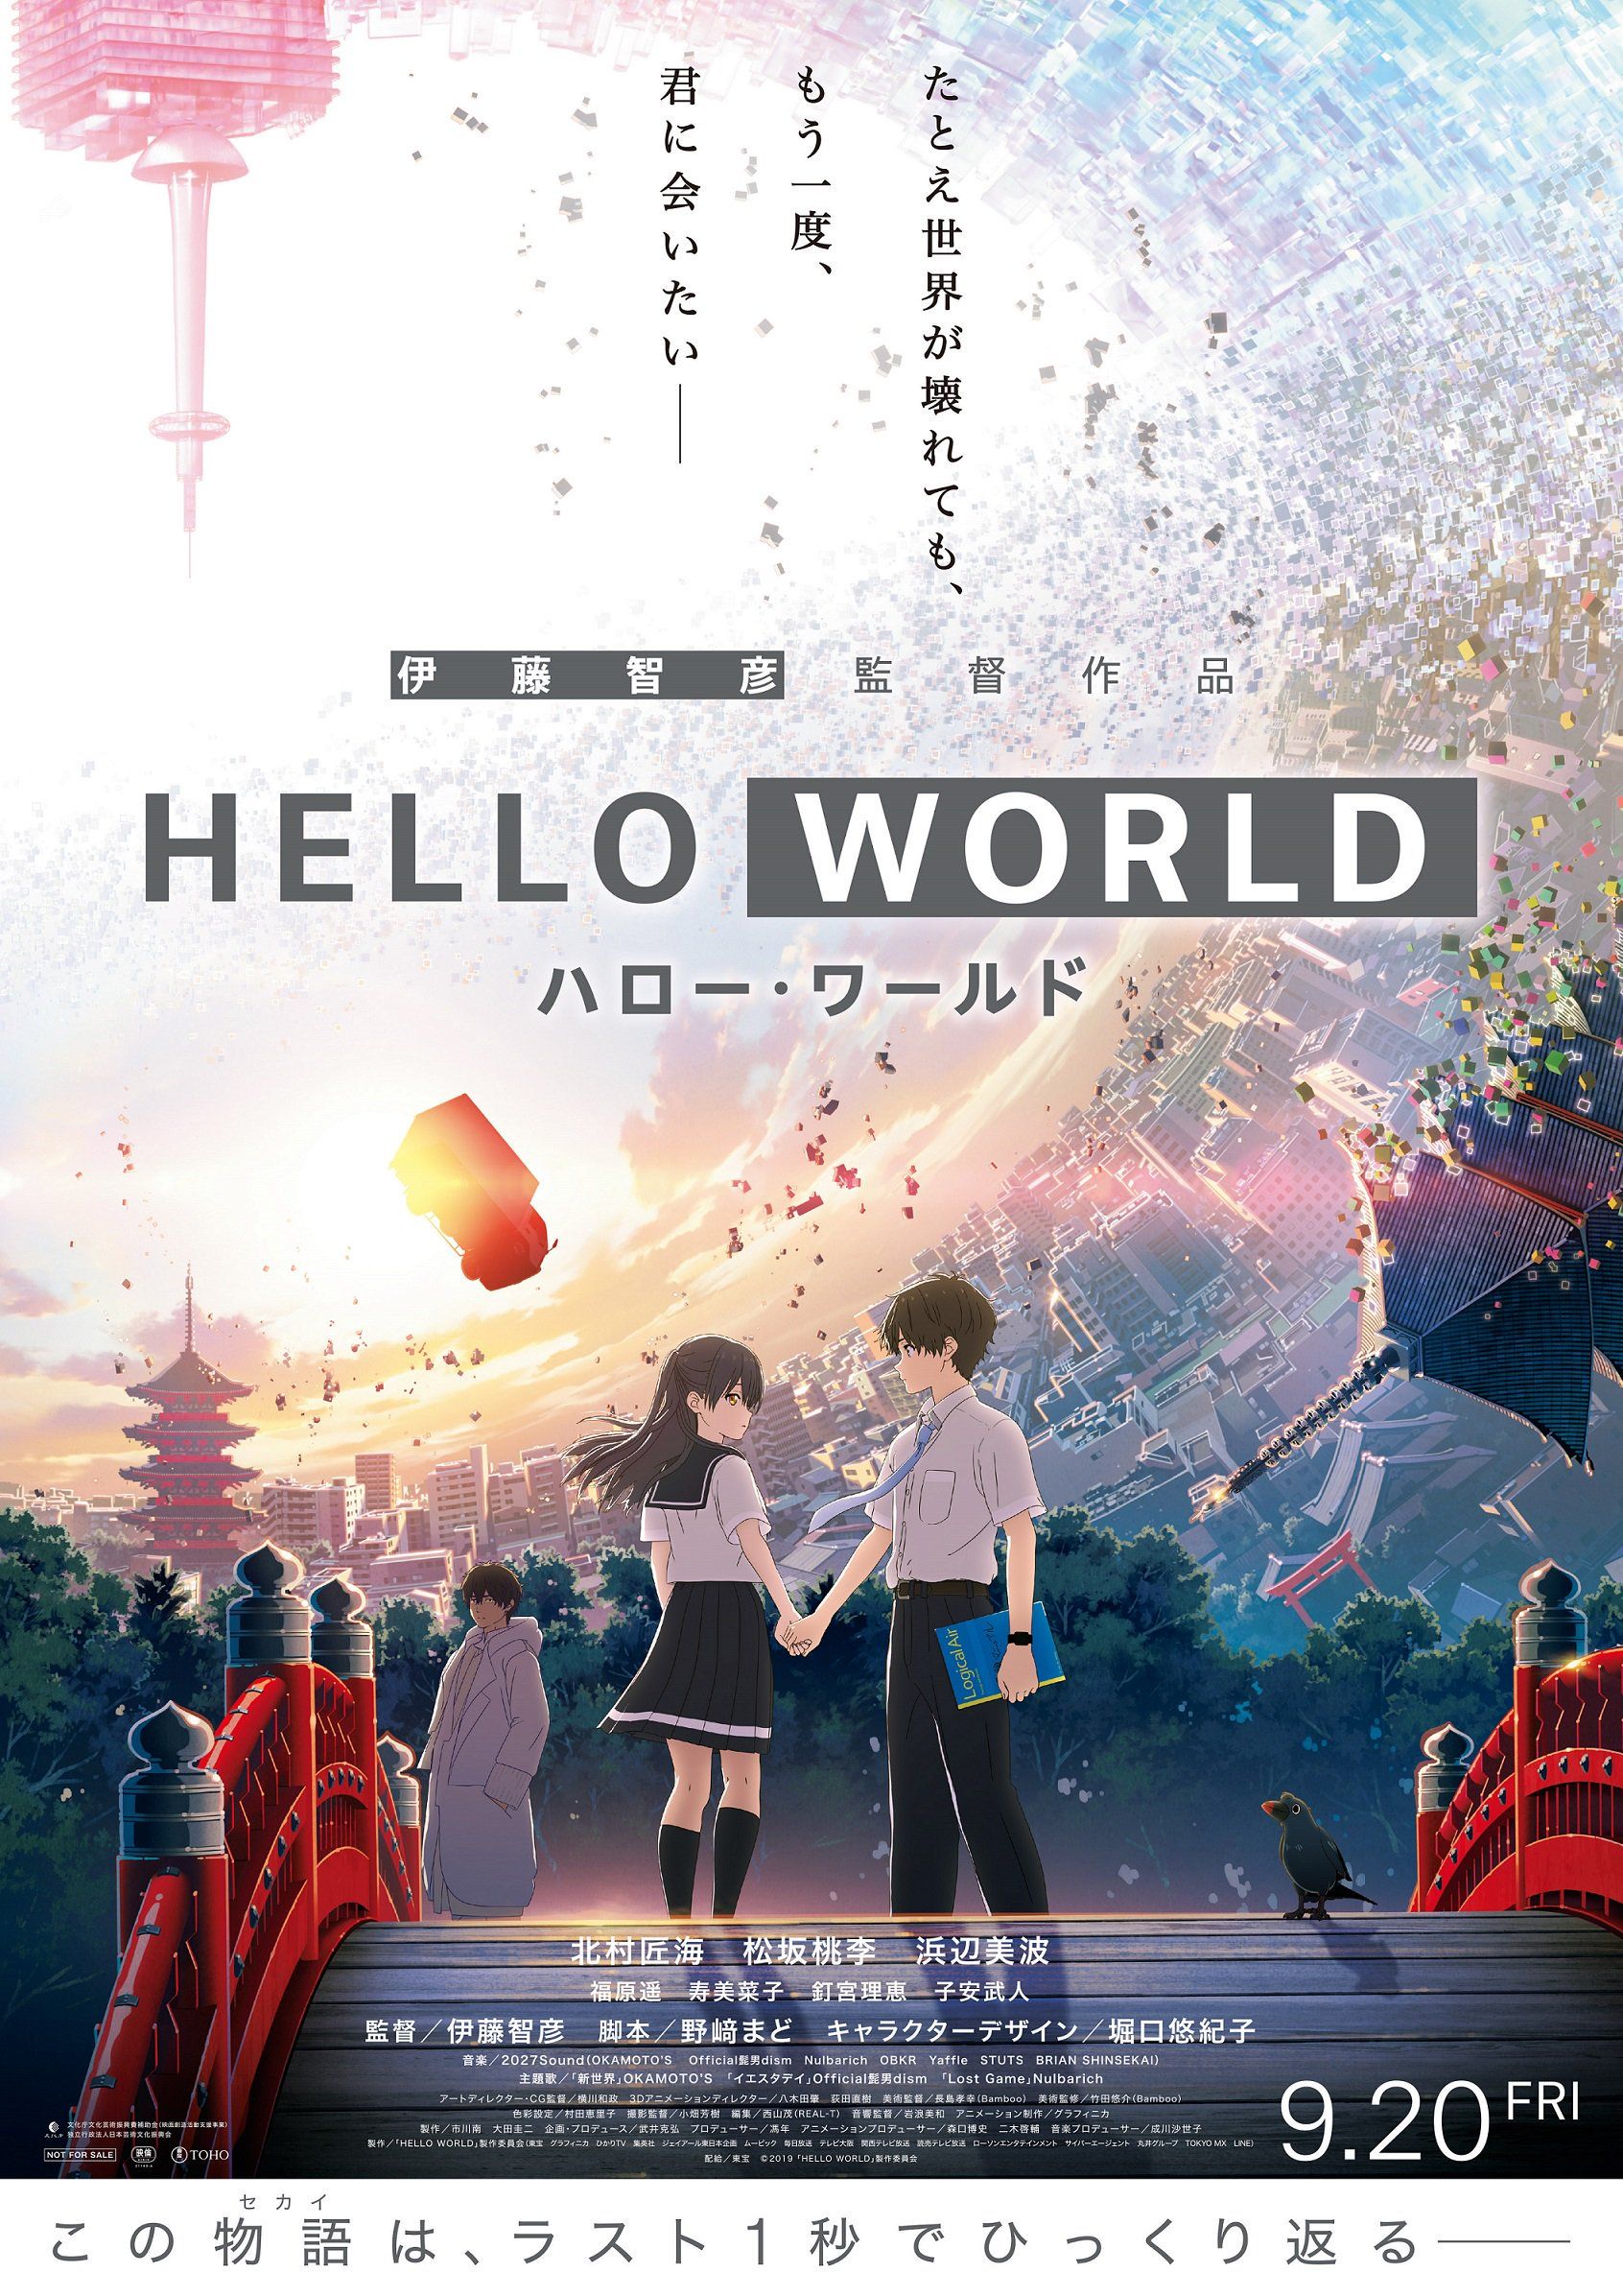 Hello World (Movie) Anime Image Board